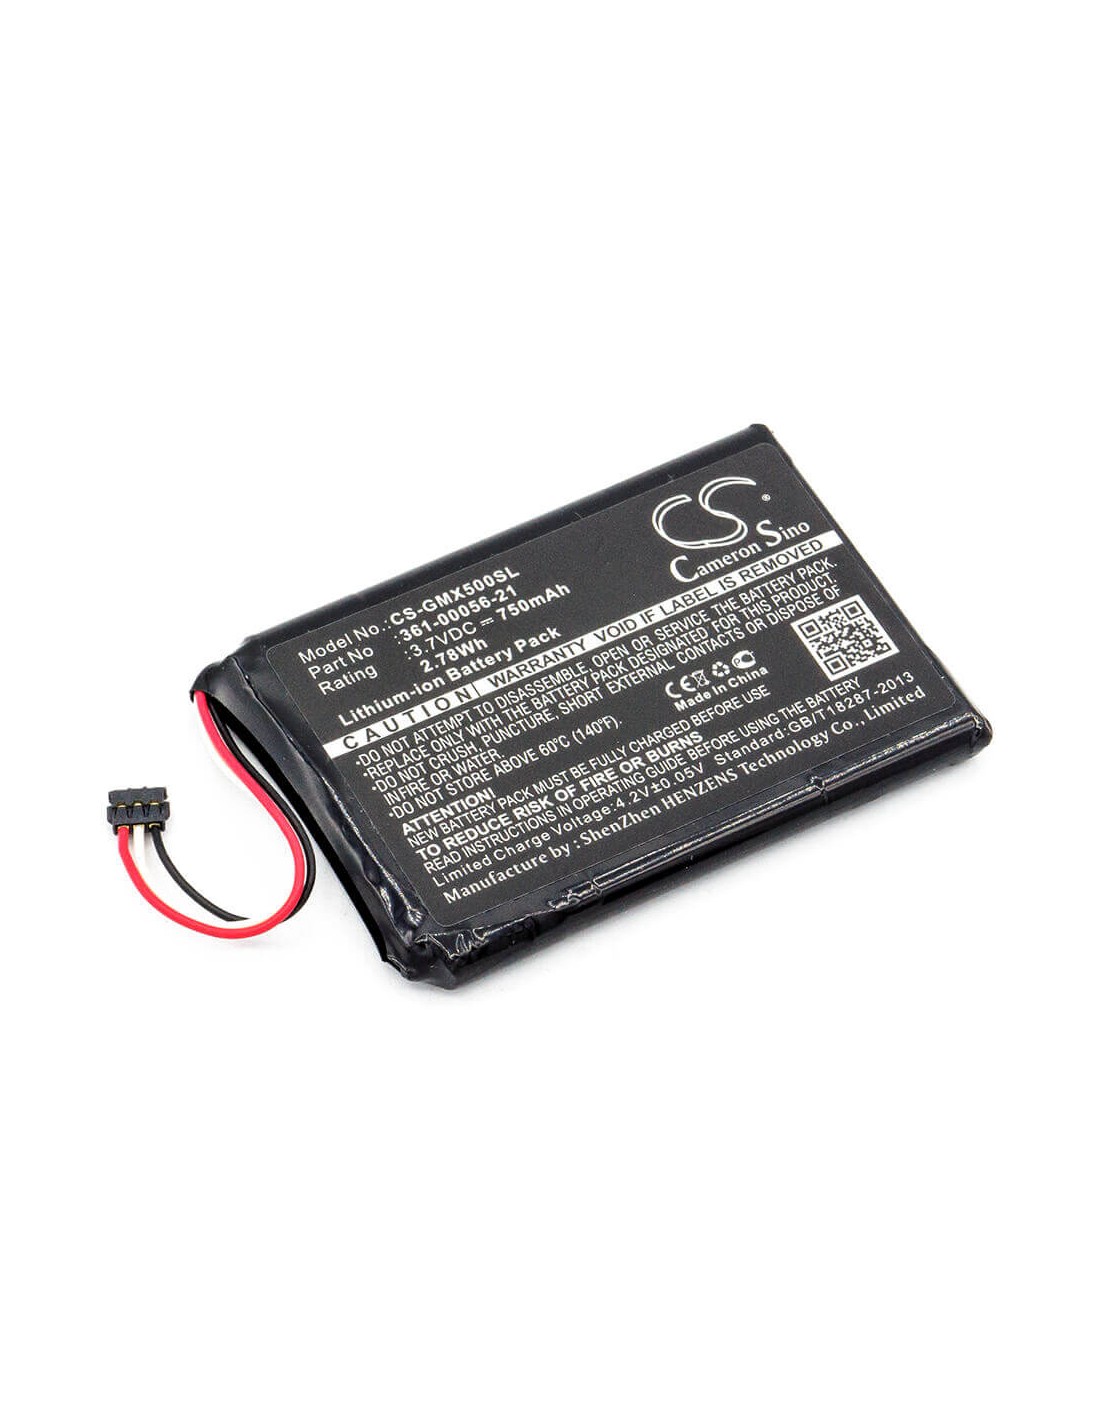 Battery for Garmin, 010-01531-00, Driveluxe 50 Lmthd 3.7V, 750mAh - 2.78Wh